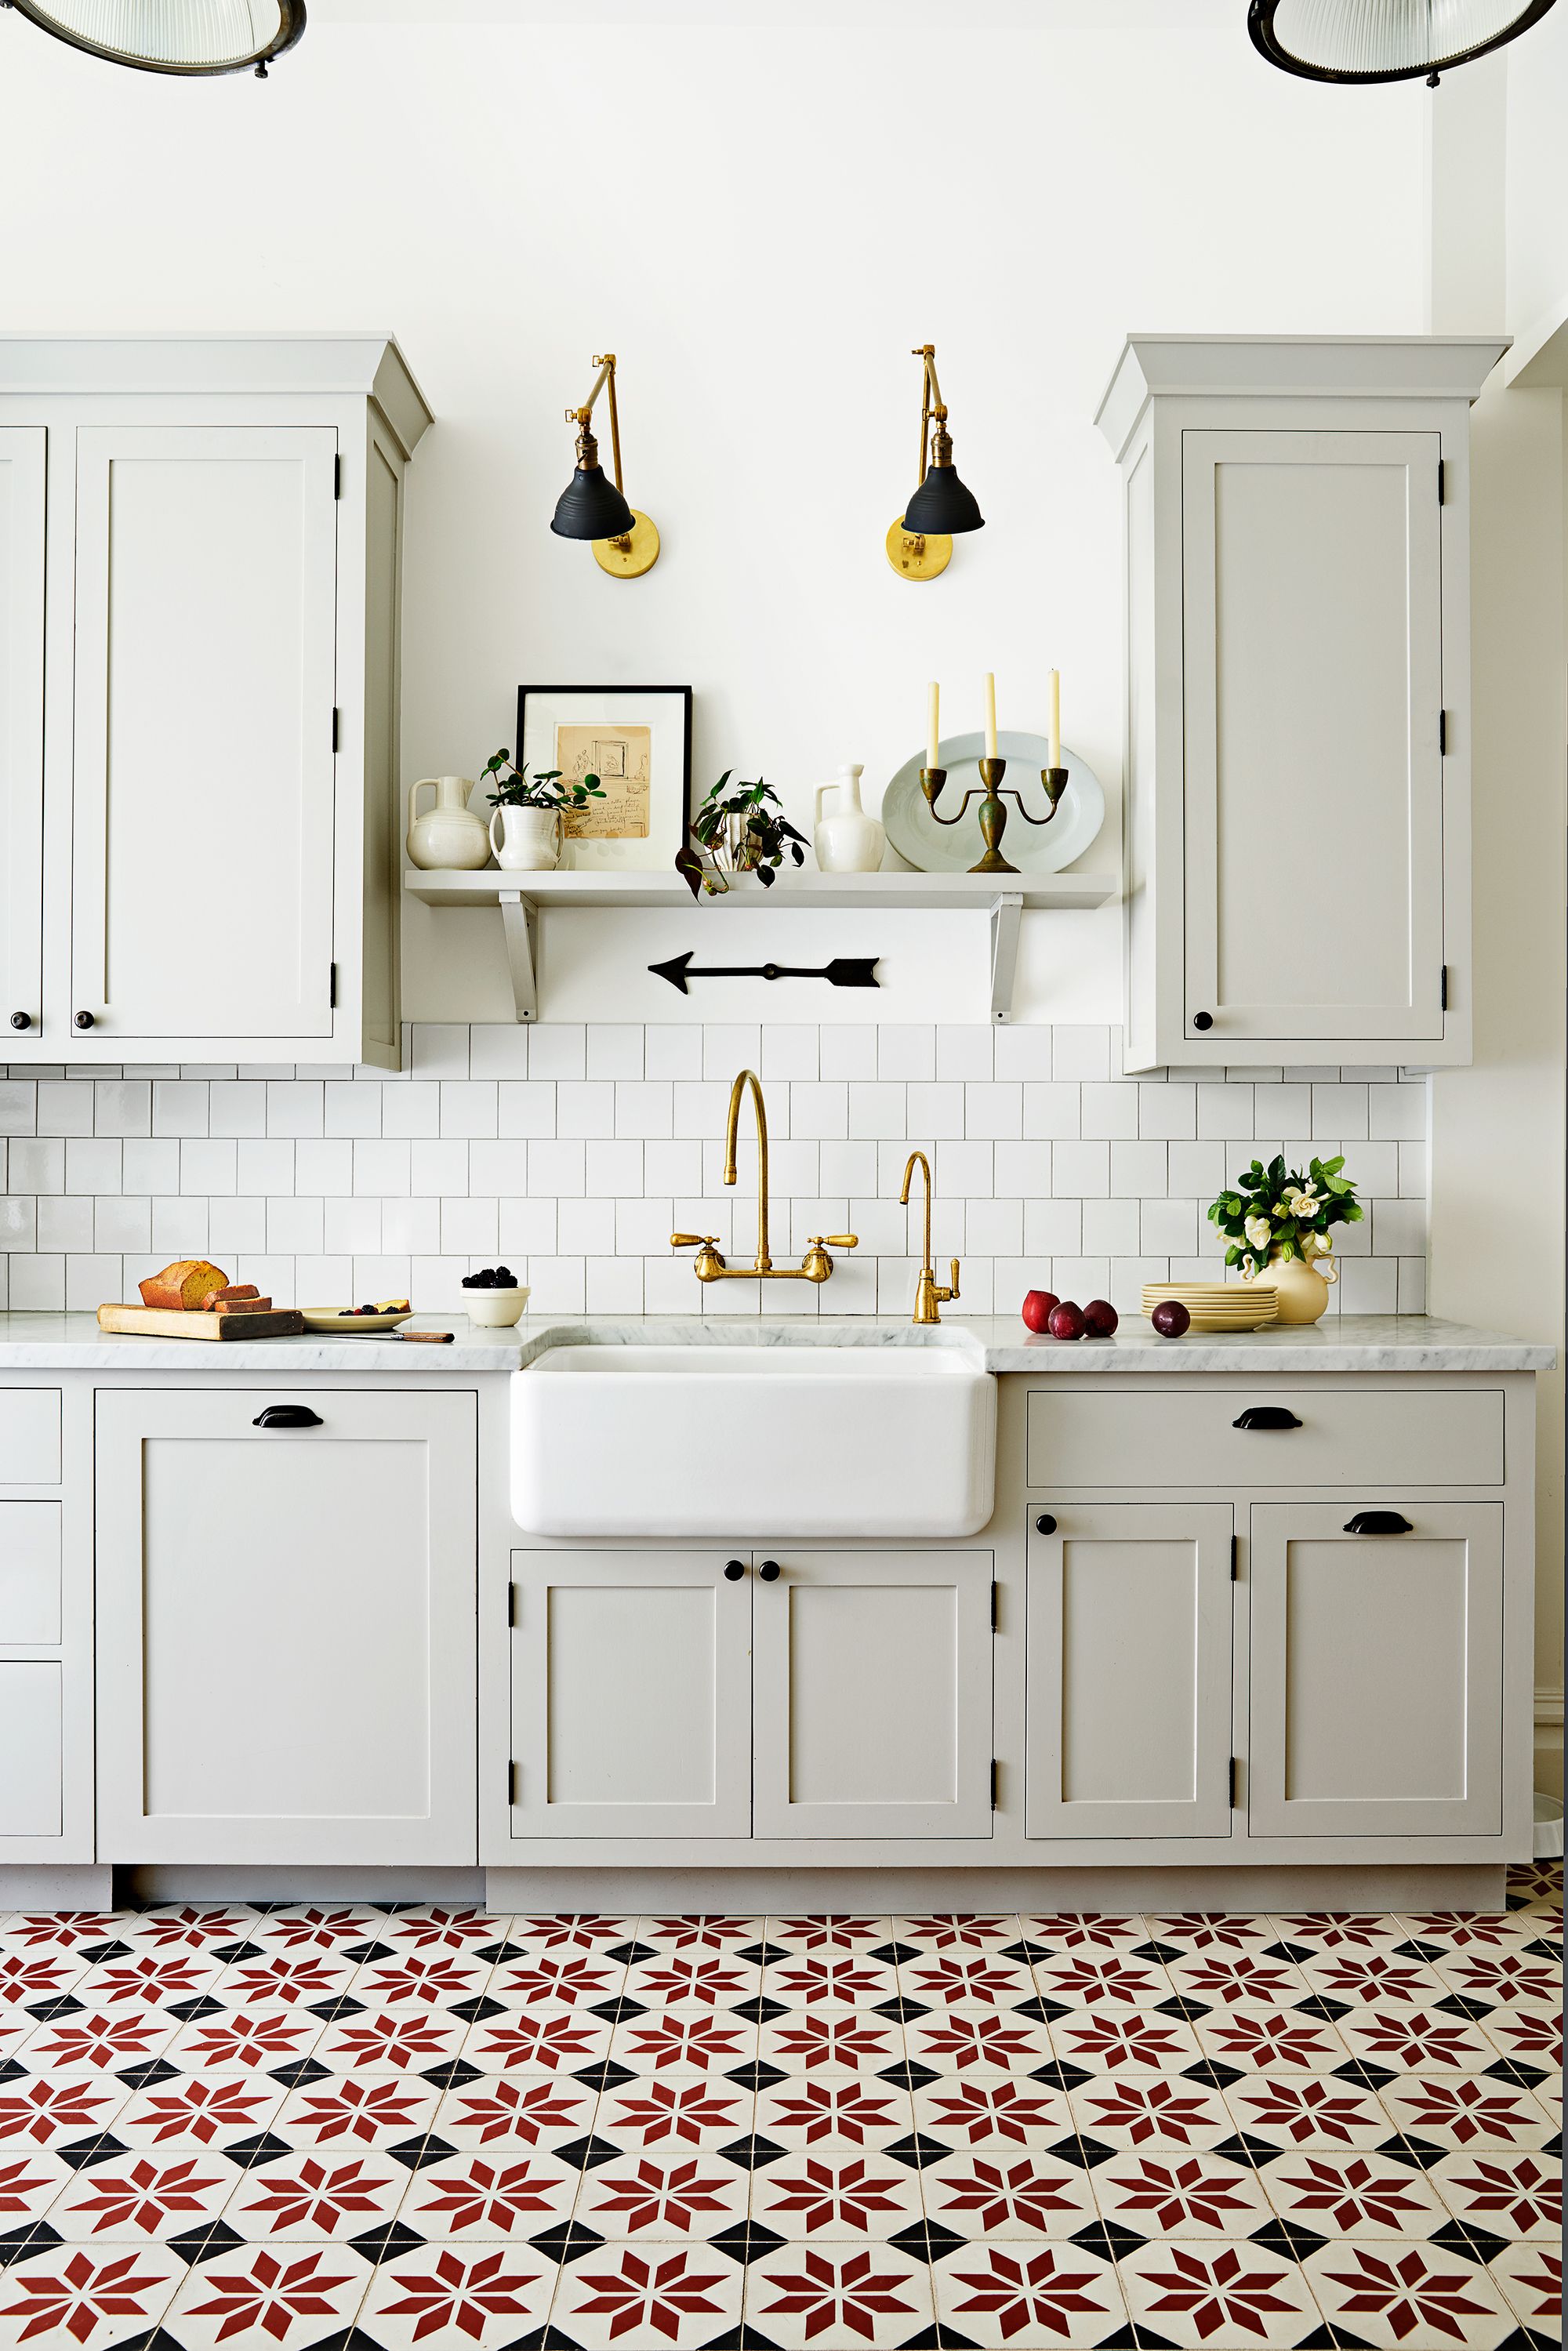 18 Modern Floor Tile Designs The Best, How To Install Kitchen Floor Tile